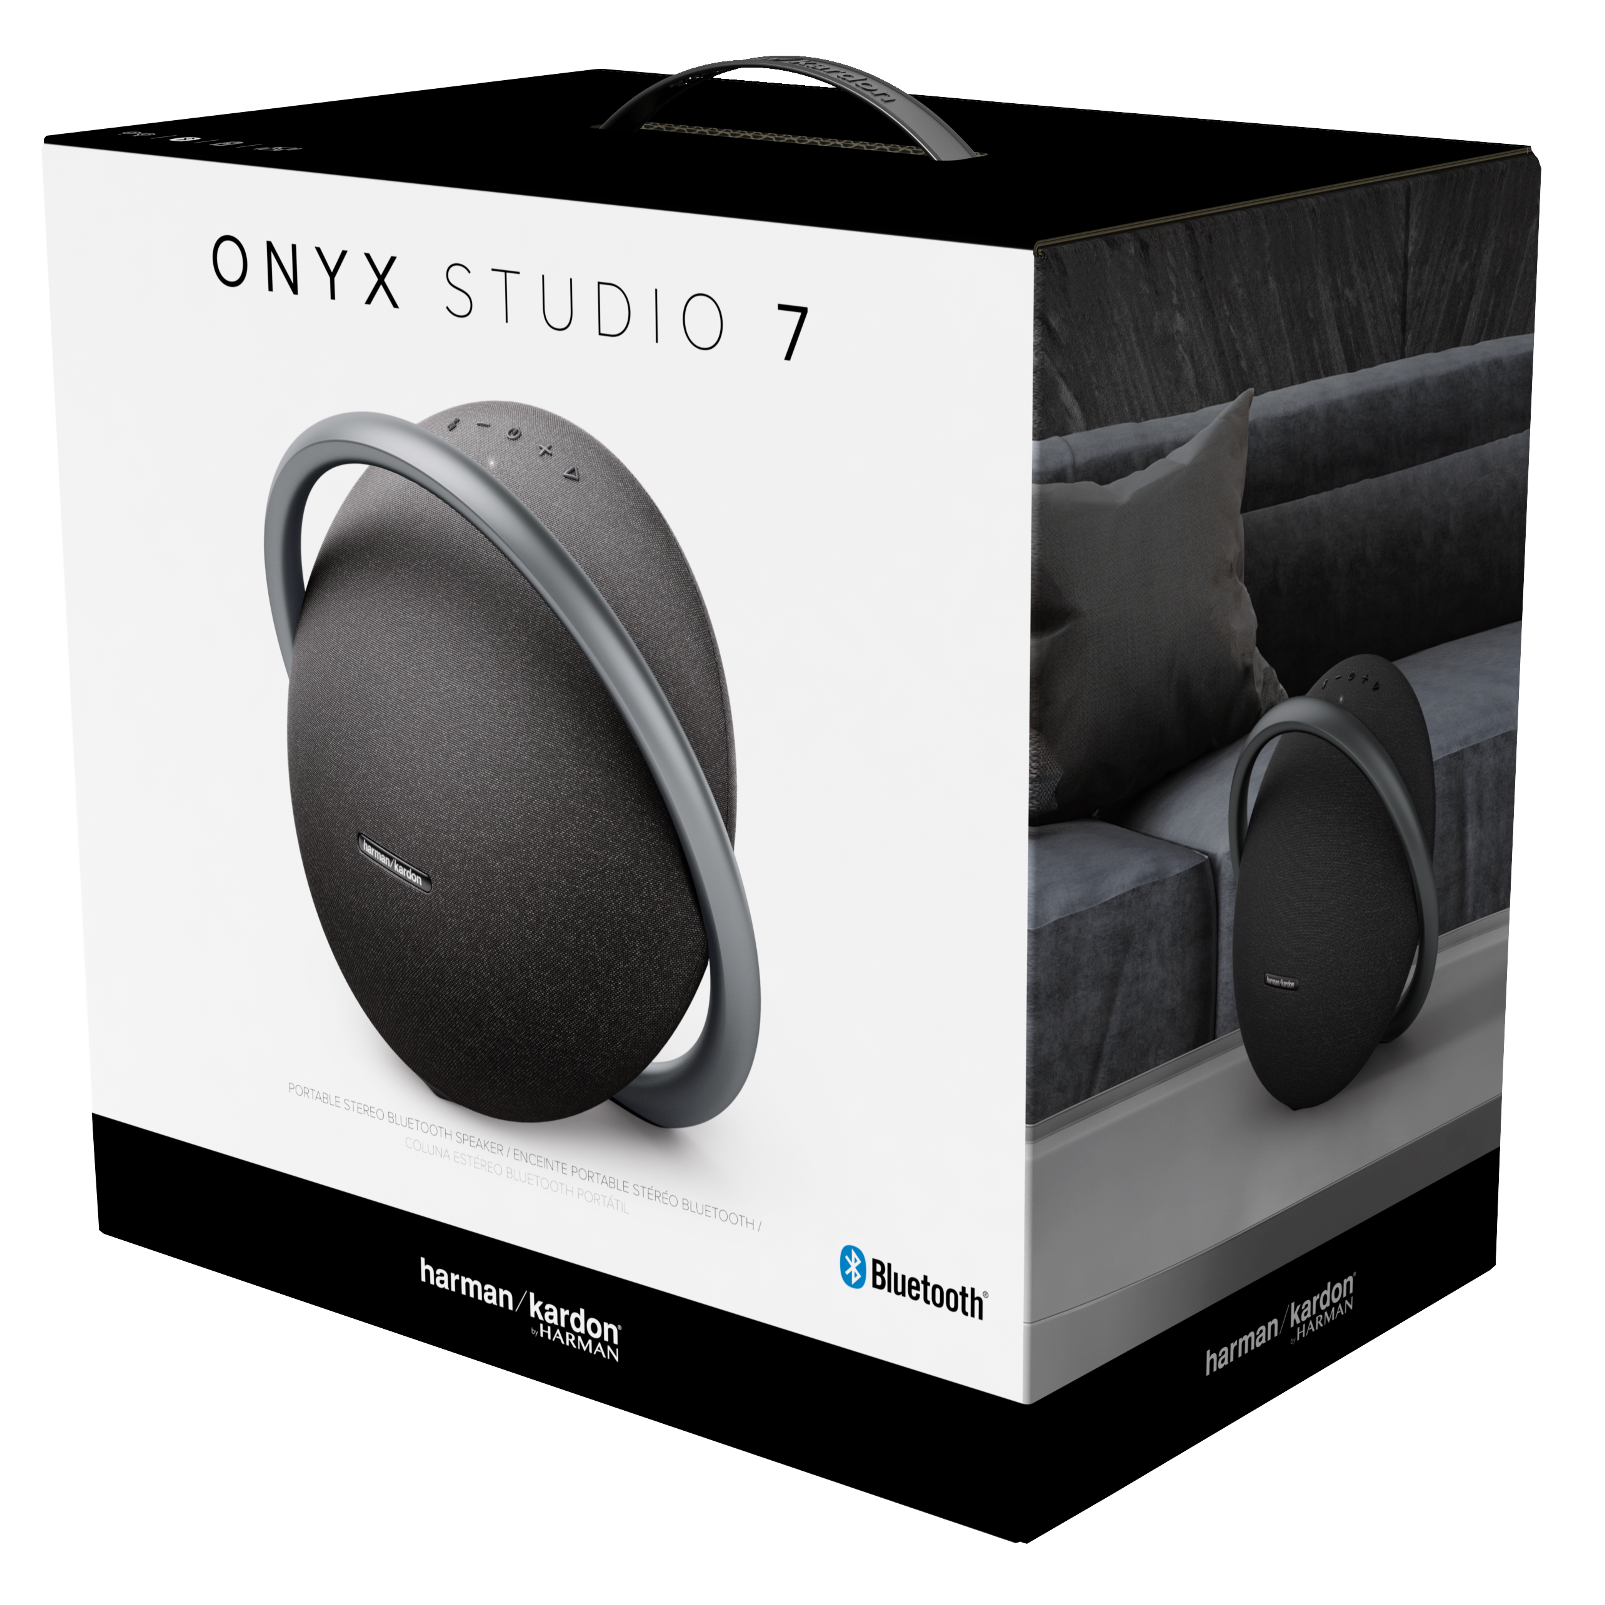 onyx studio 6 pairing 2 speakers